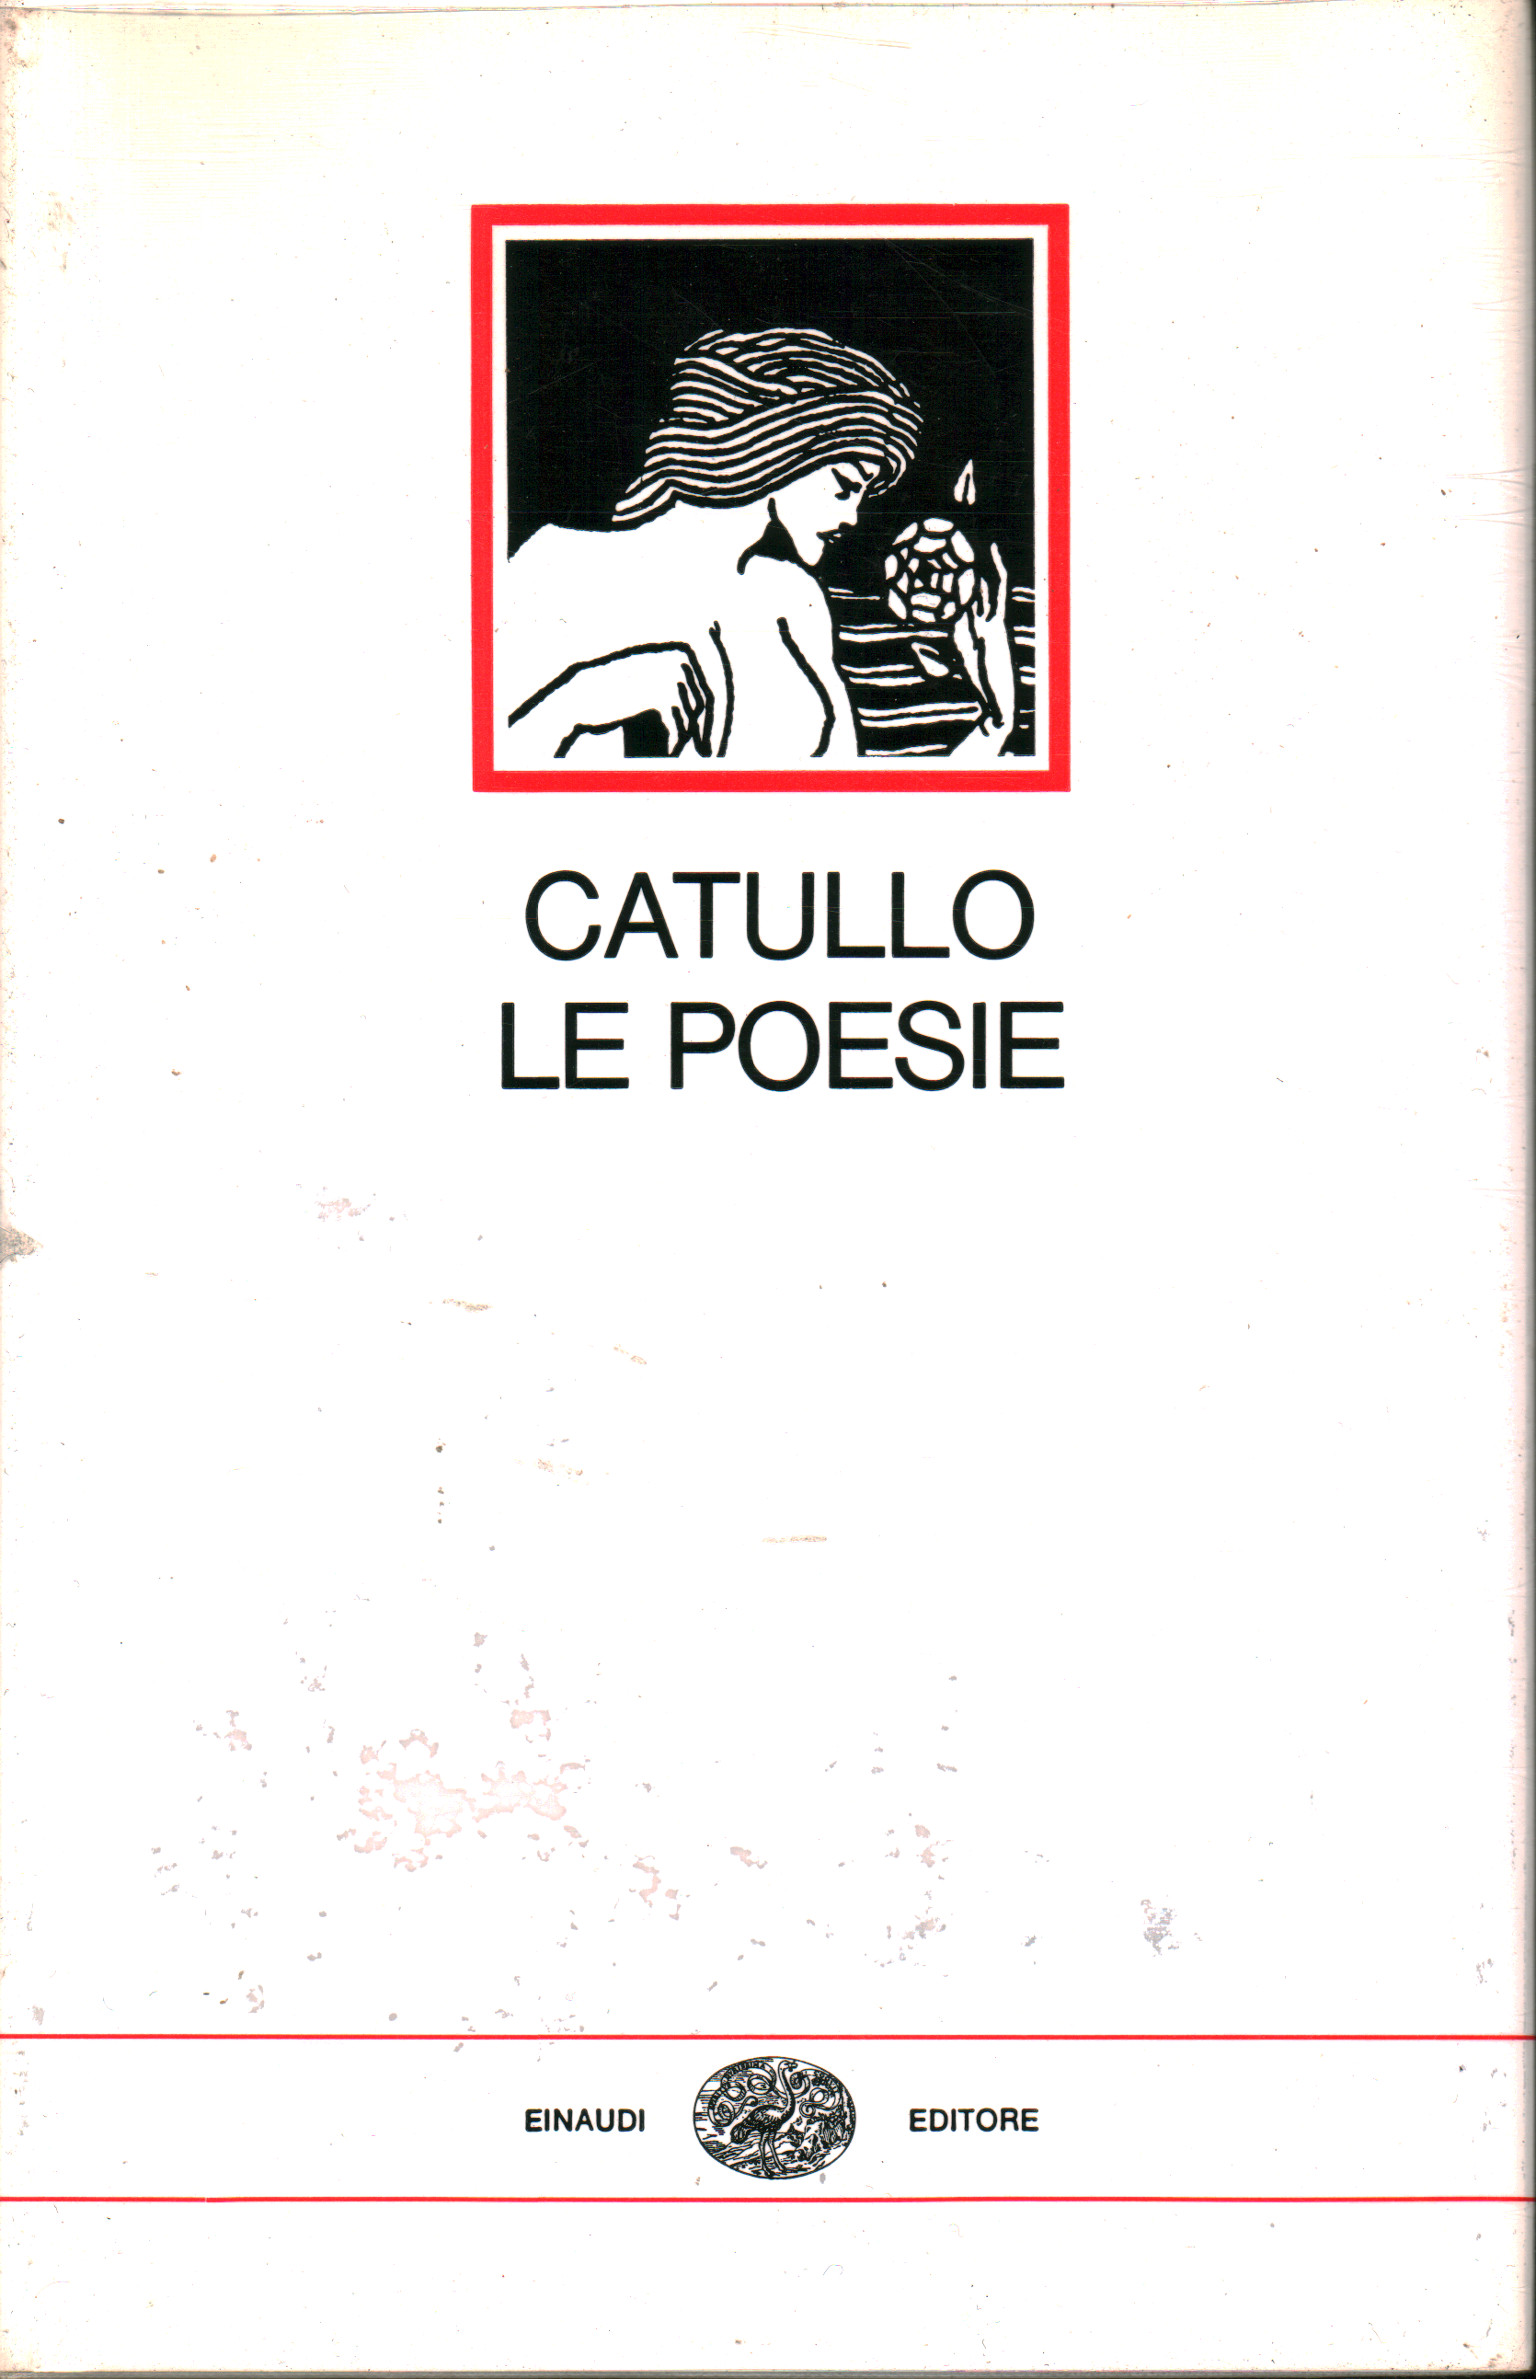 The poems, Catullus